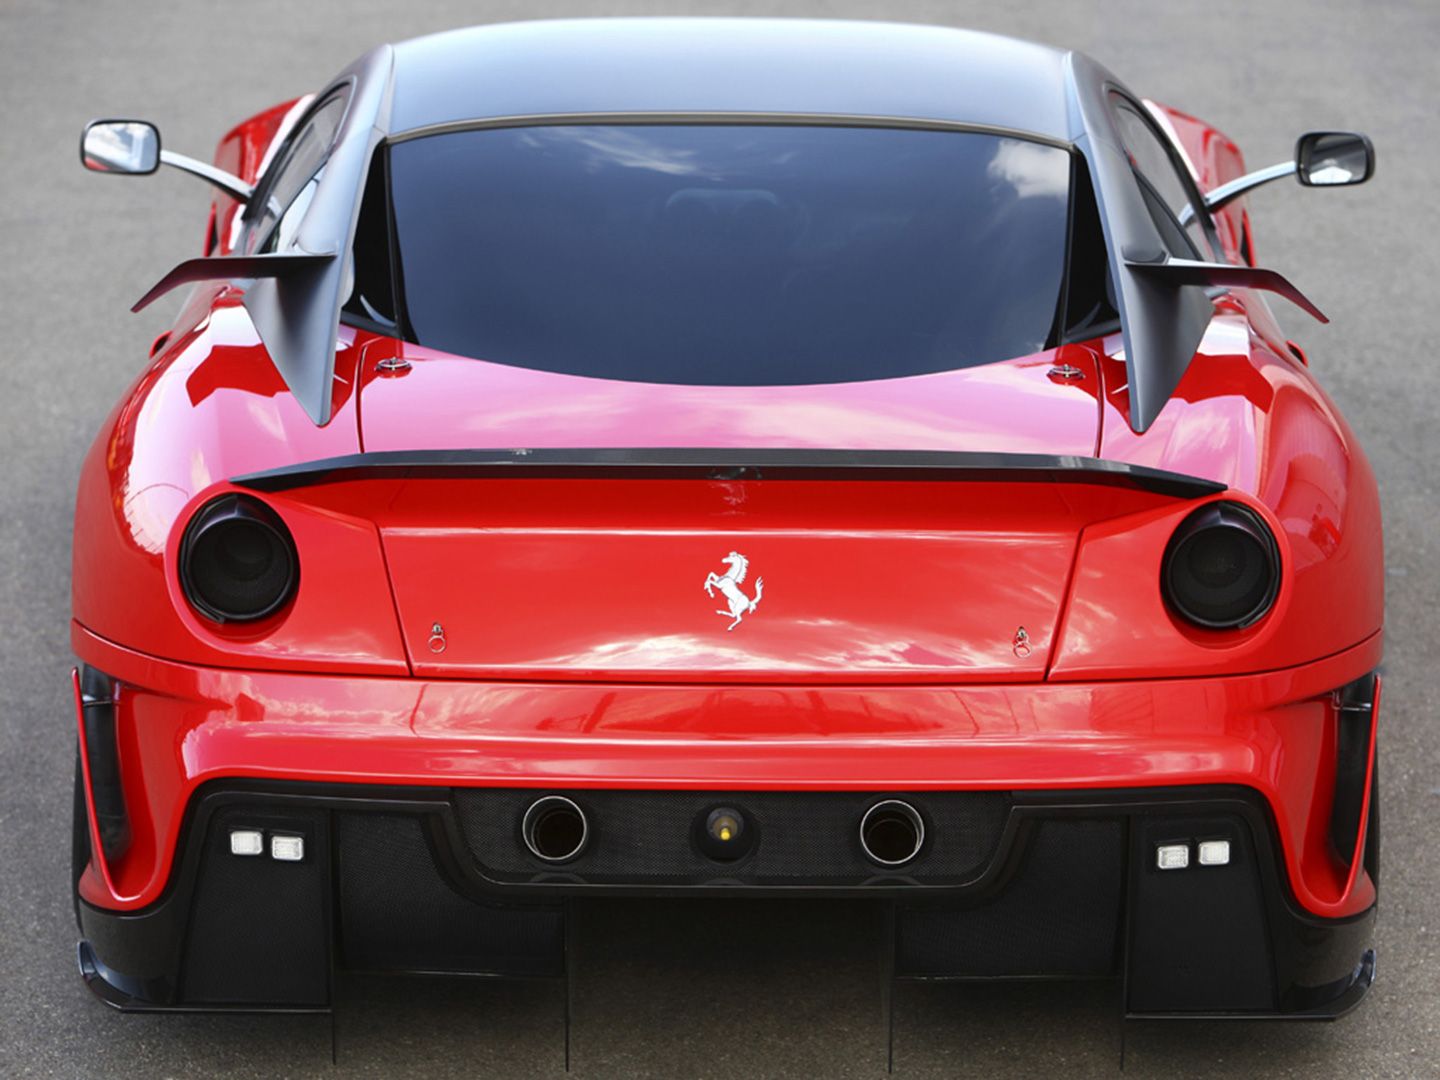 A picture of the Ferrari 599XX.